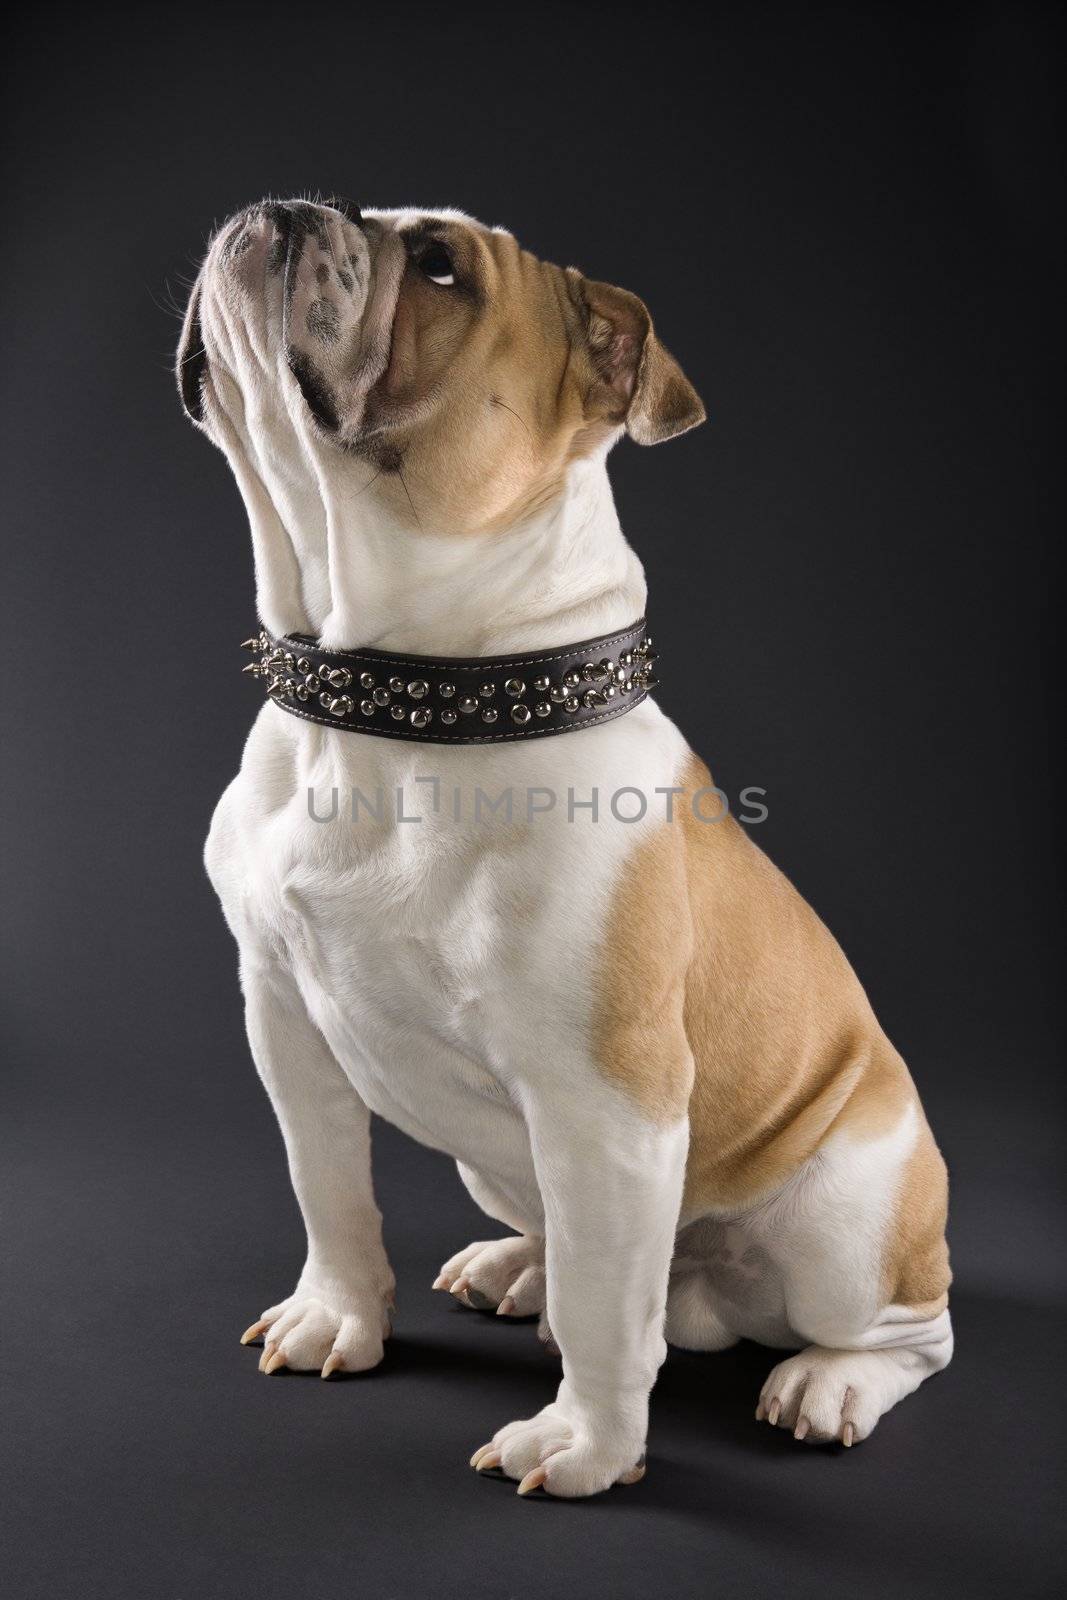 Sitting English Bulldog wearing spiked collar and looking upward.